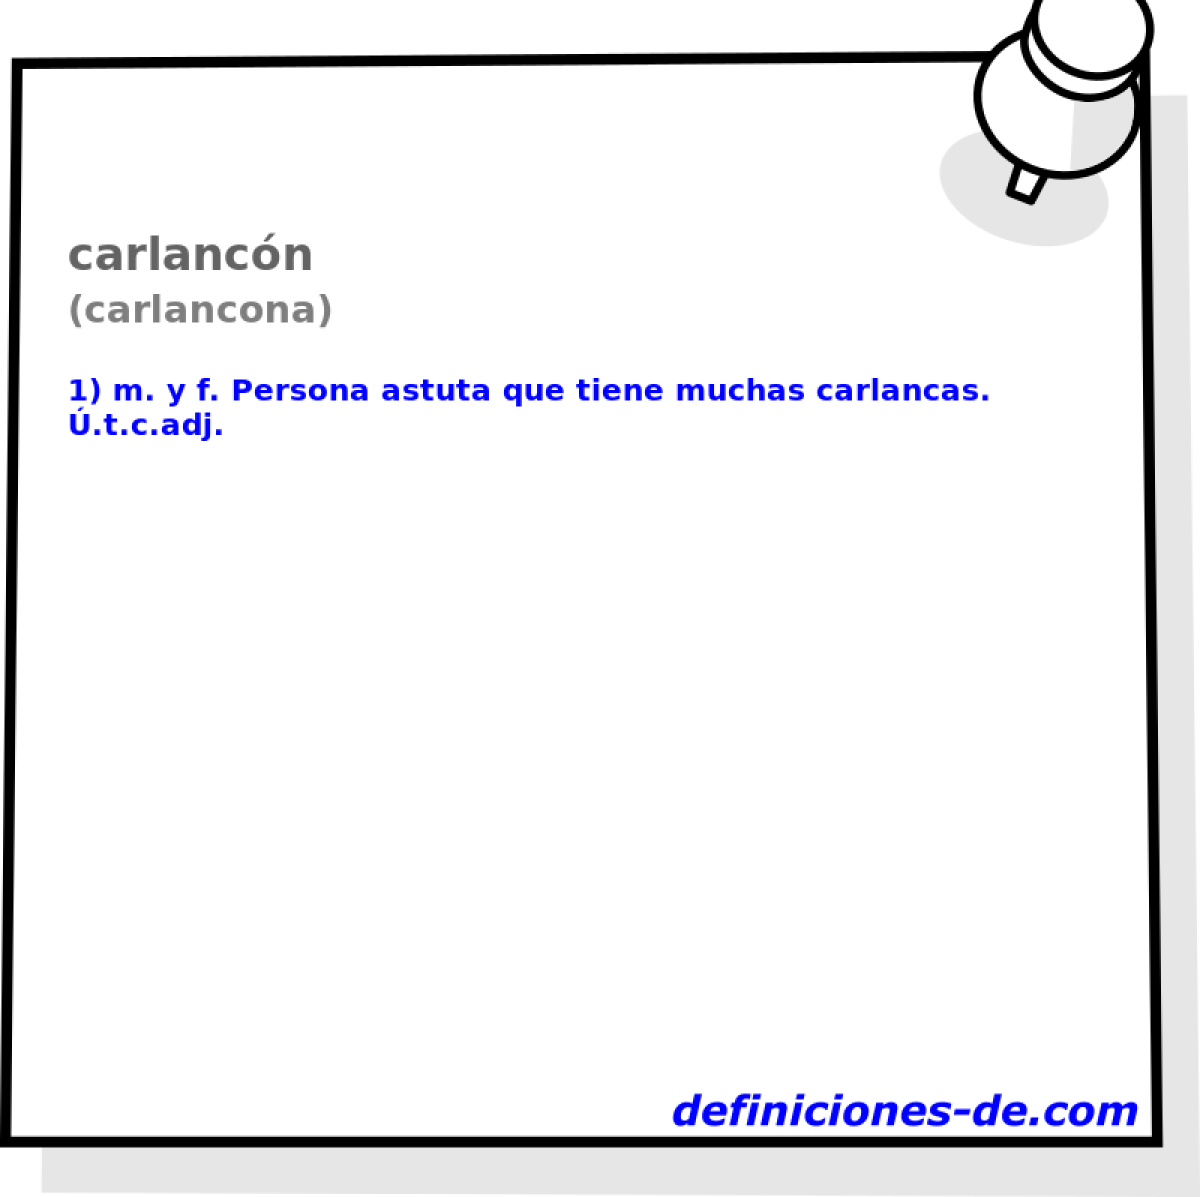 carlancn (carlancona)